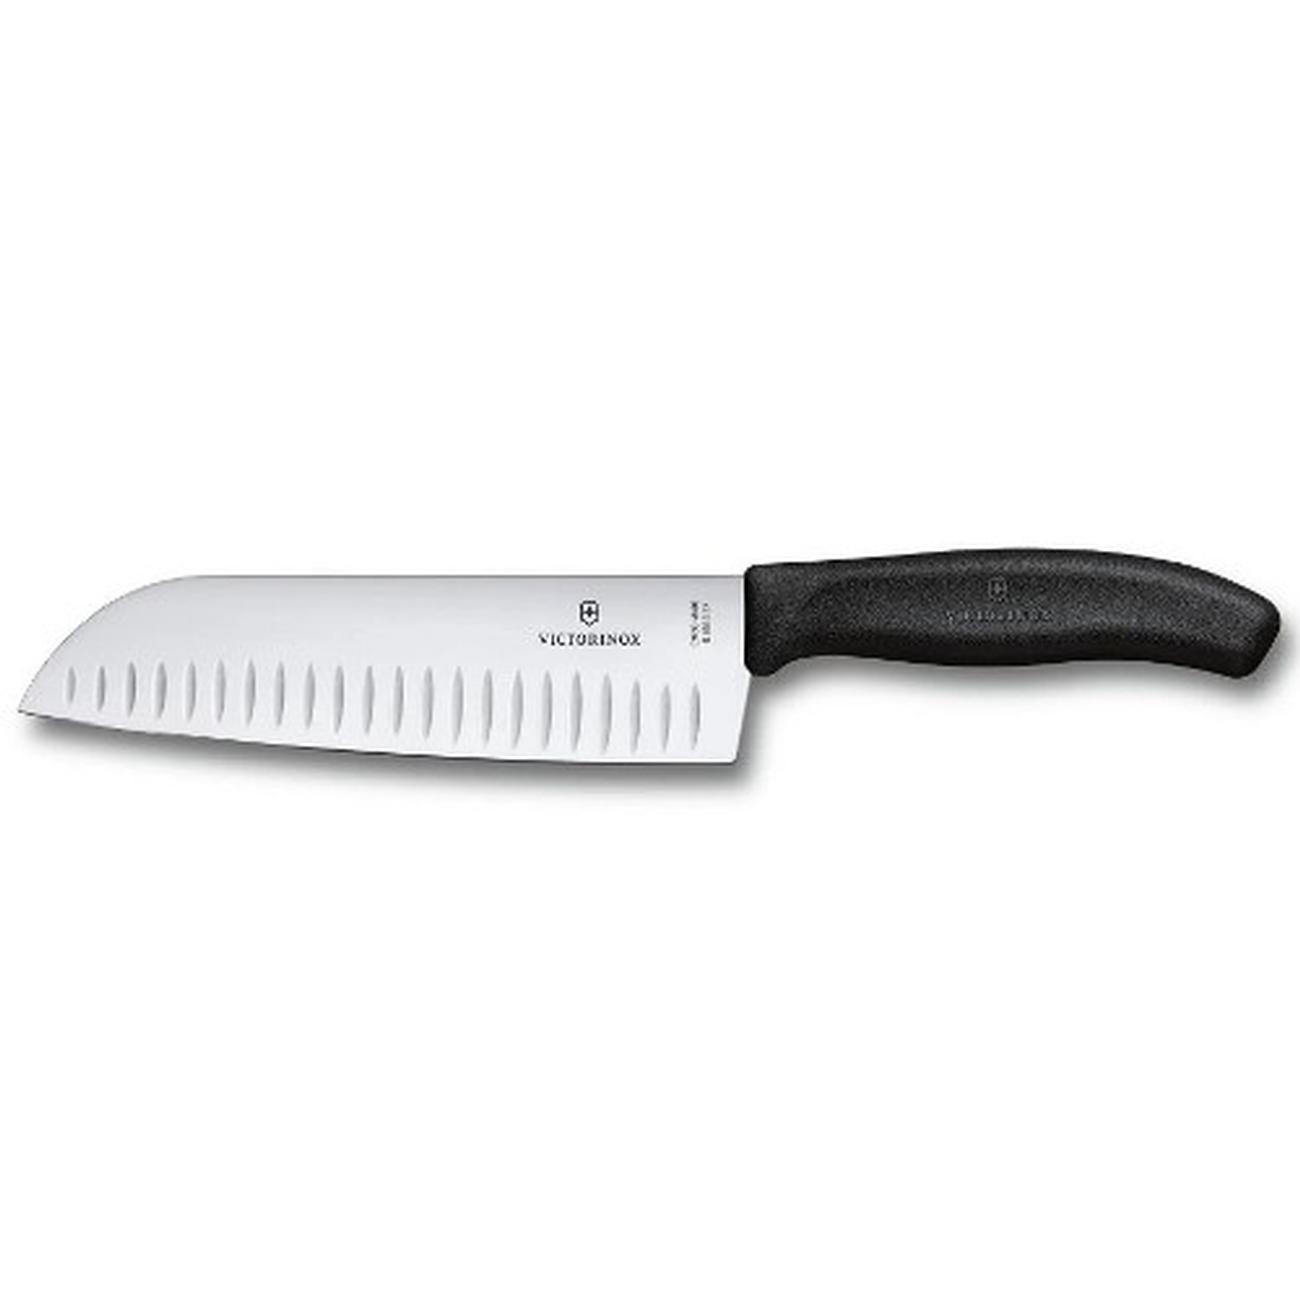 victorinox-swiss-classic-santoku-knife - Victorinox Swiss Classic Santoku Knife